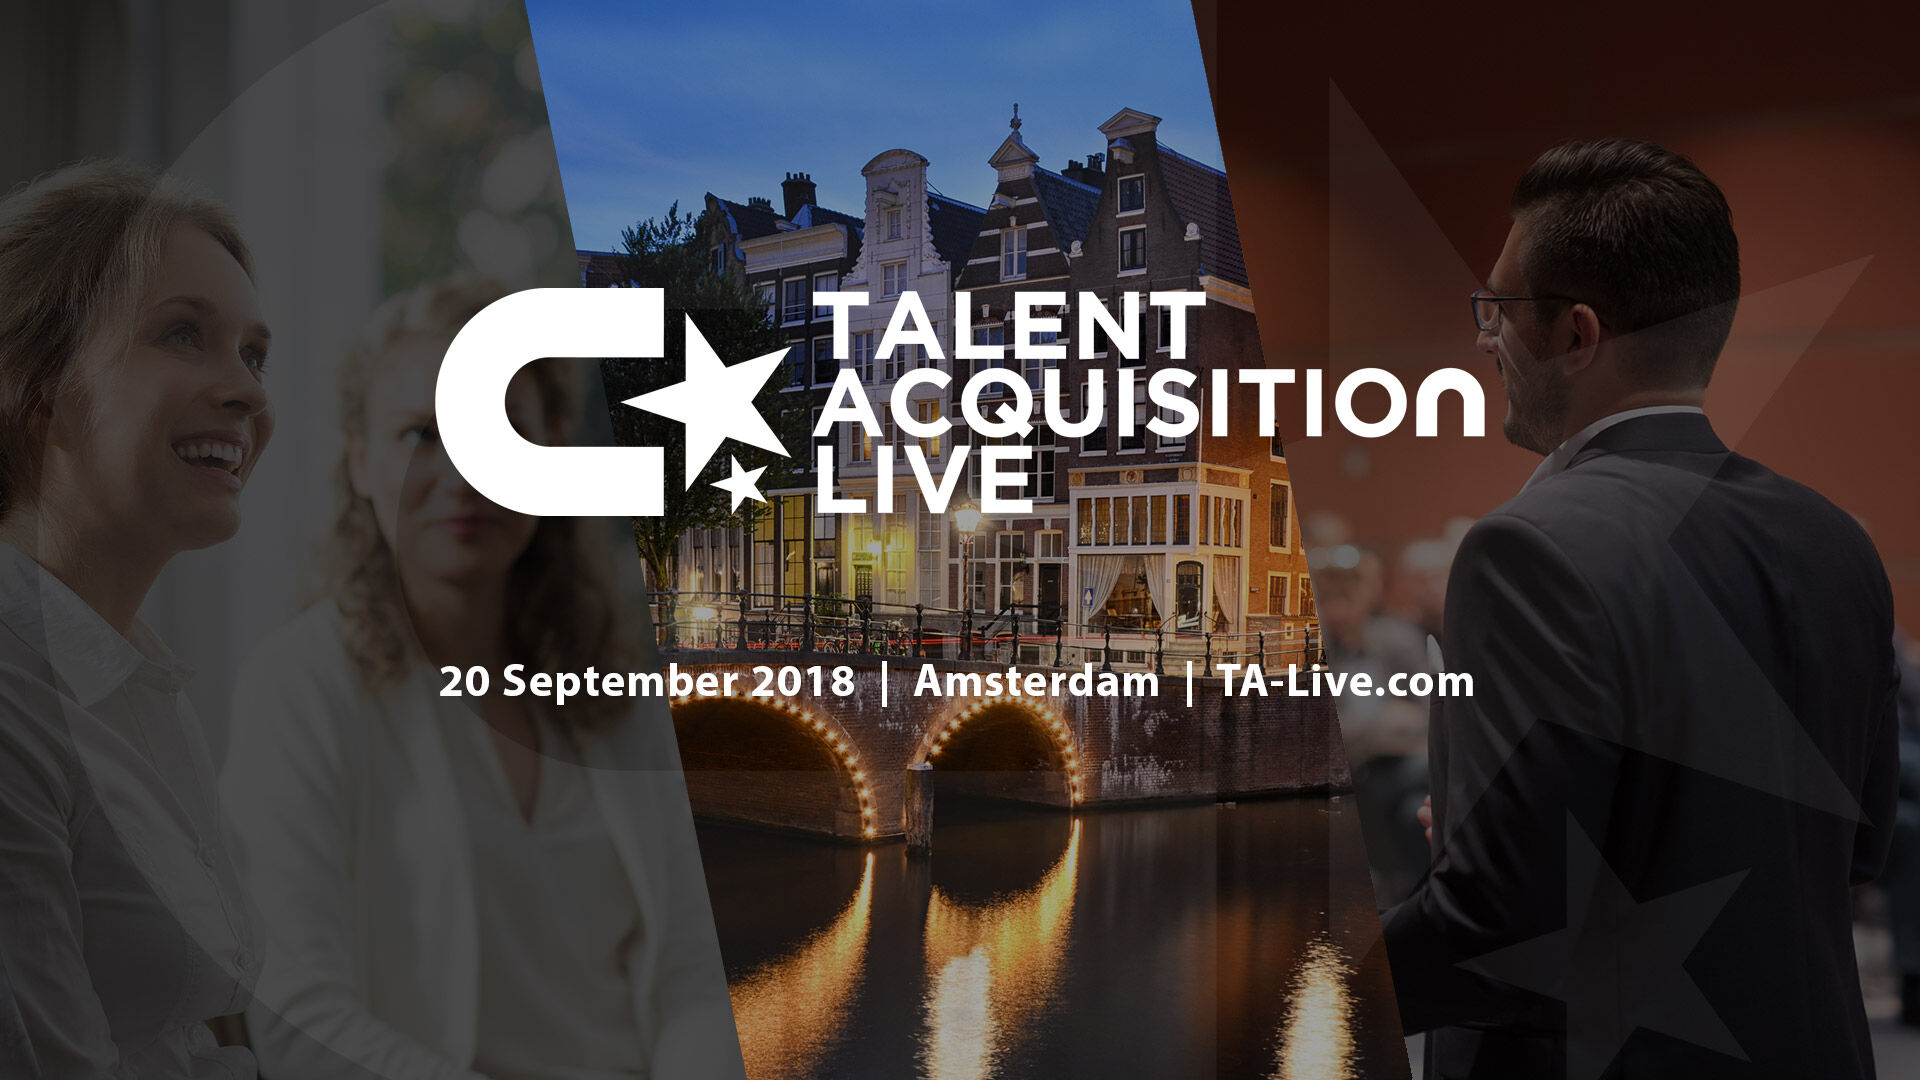 Talent Acquisition Live 2018: Het nieuwe Europese event over recruitmentinnovatie